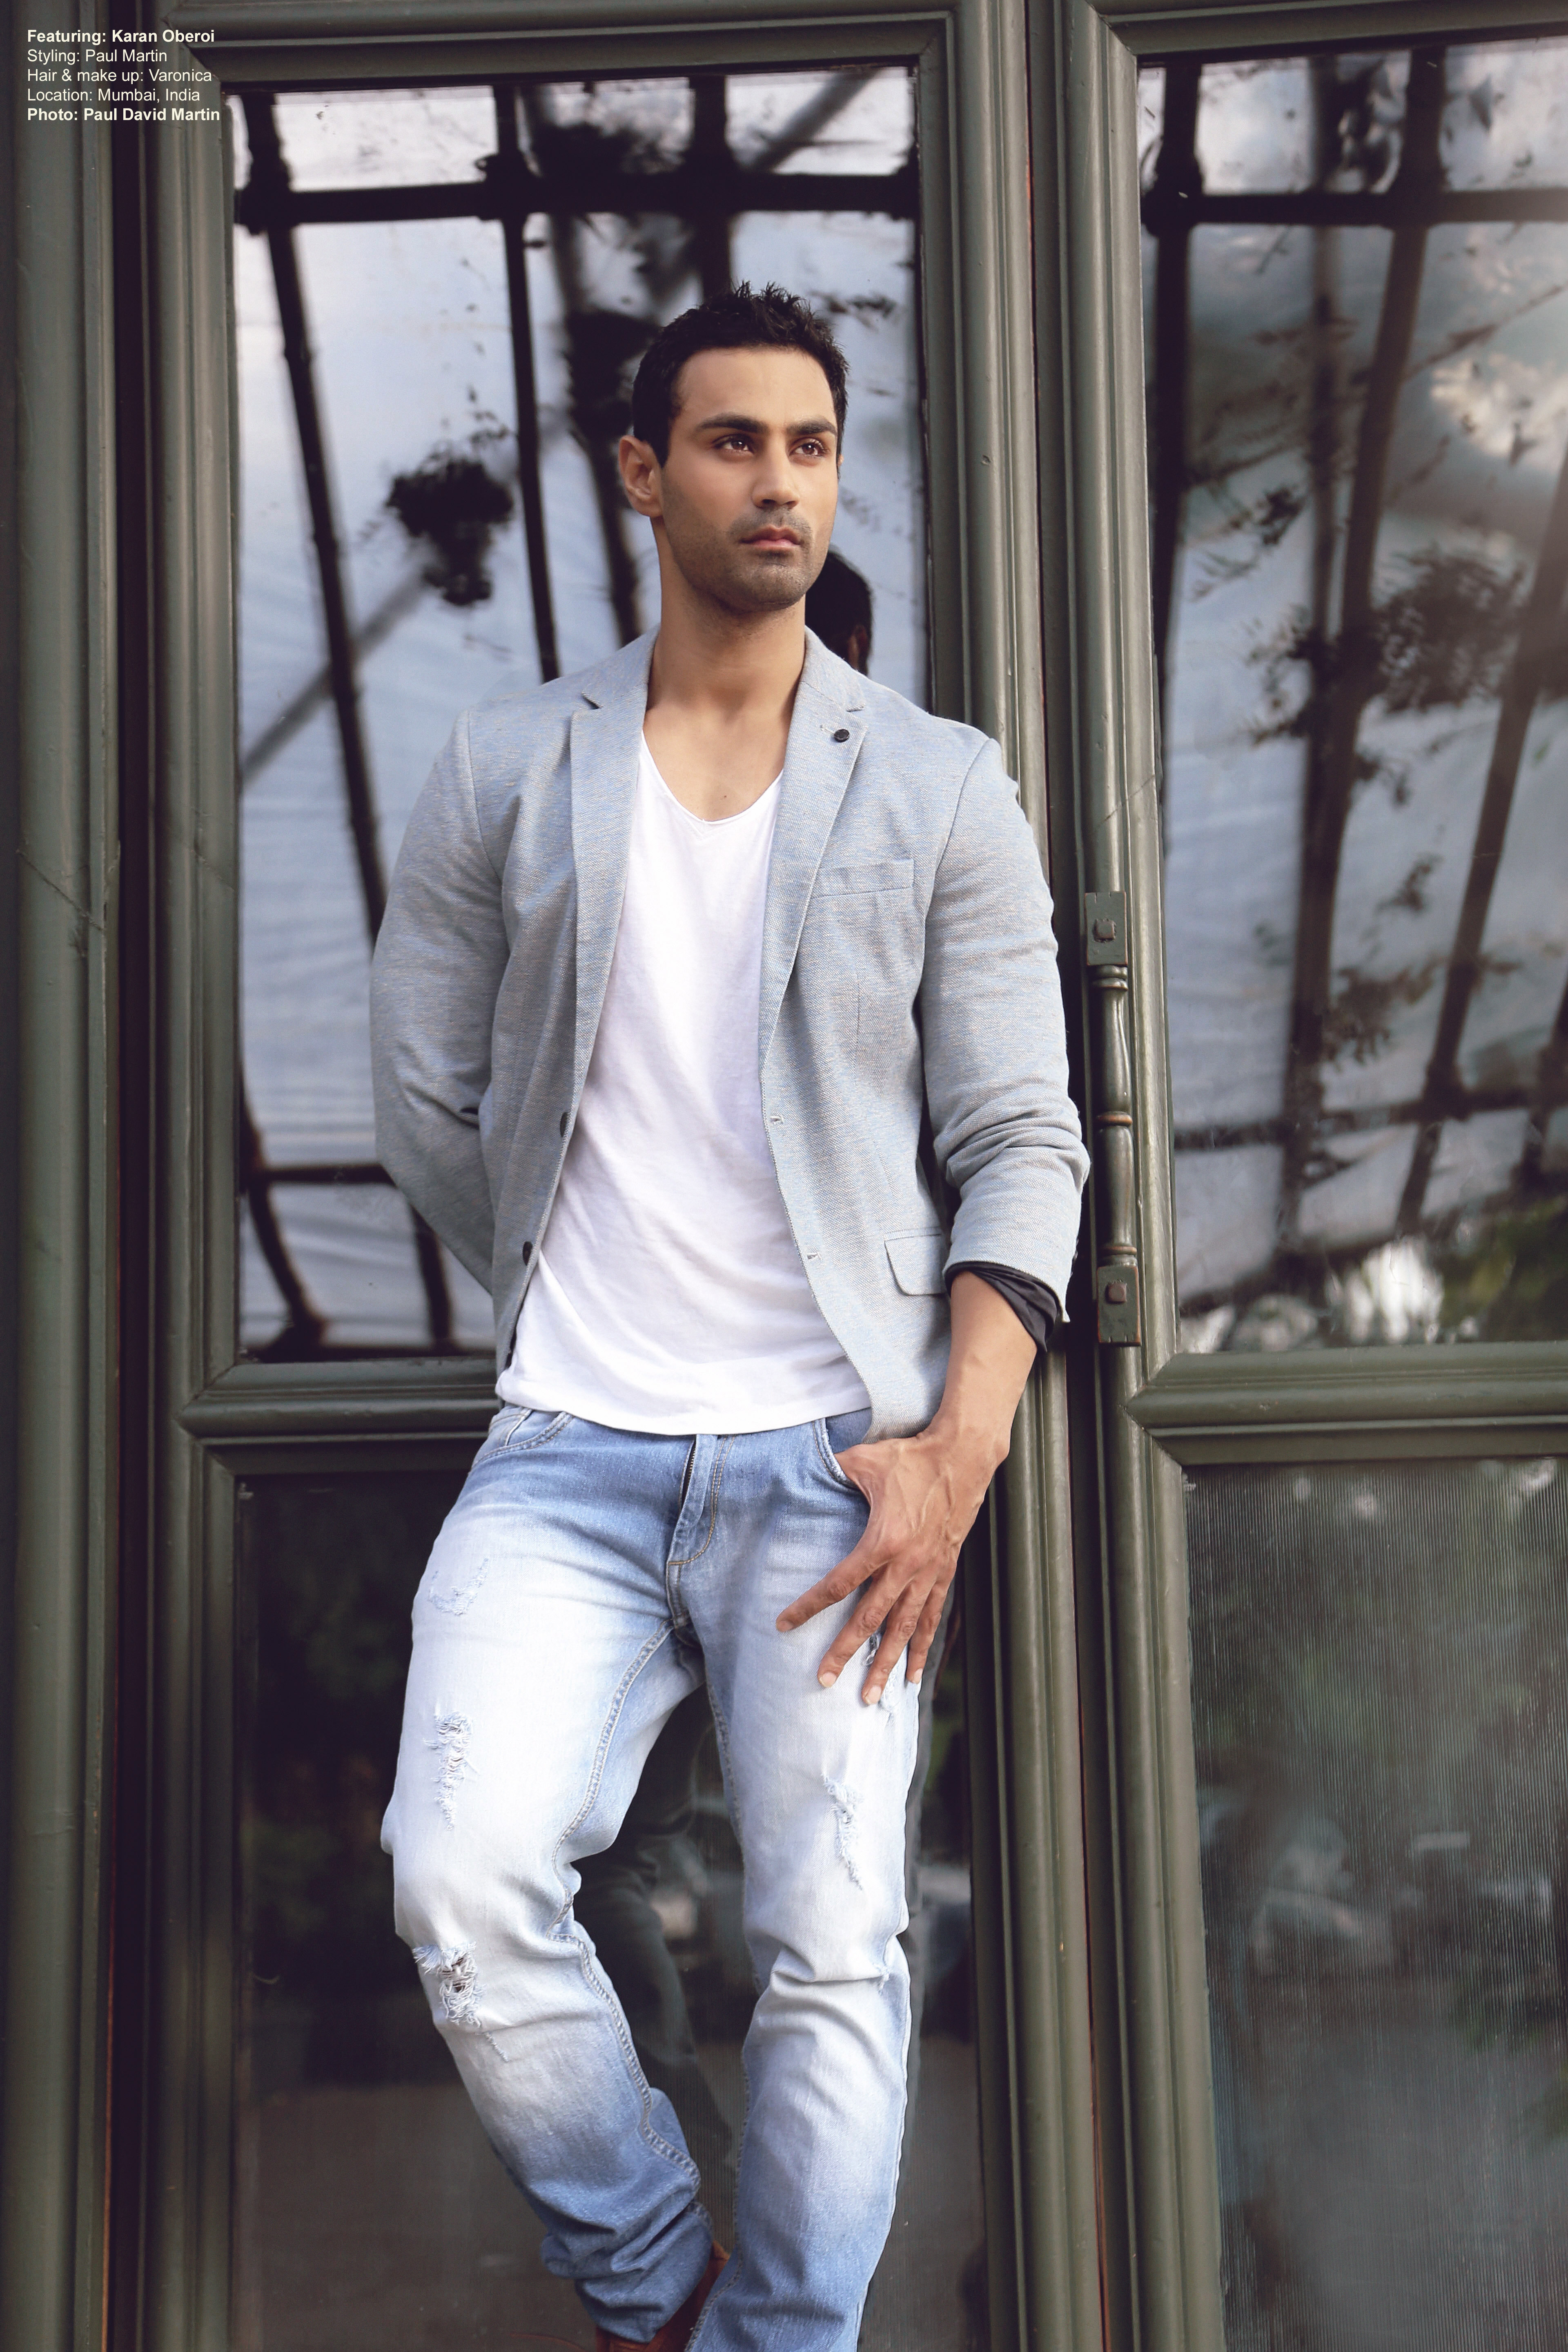 Hottest Indian male model Karan oberoi.